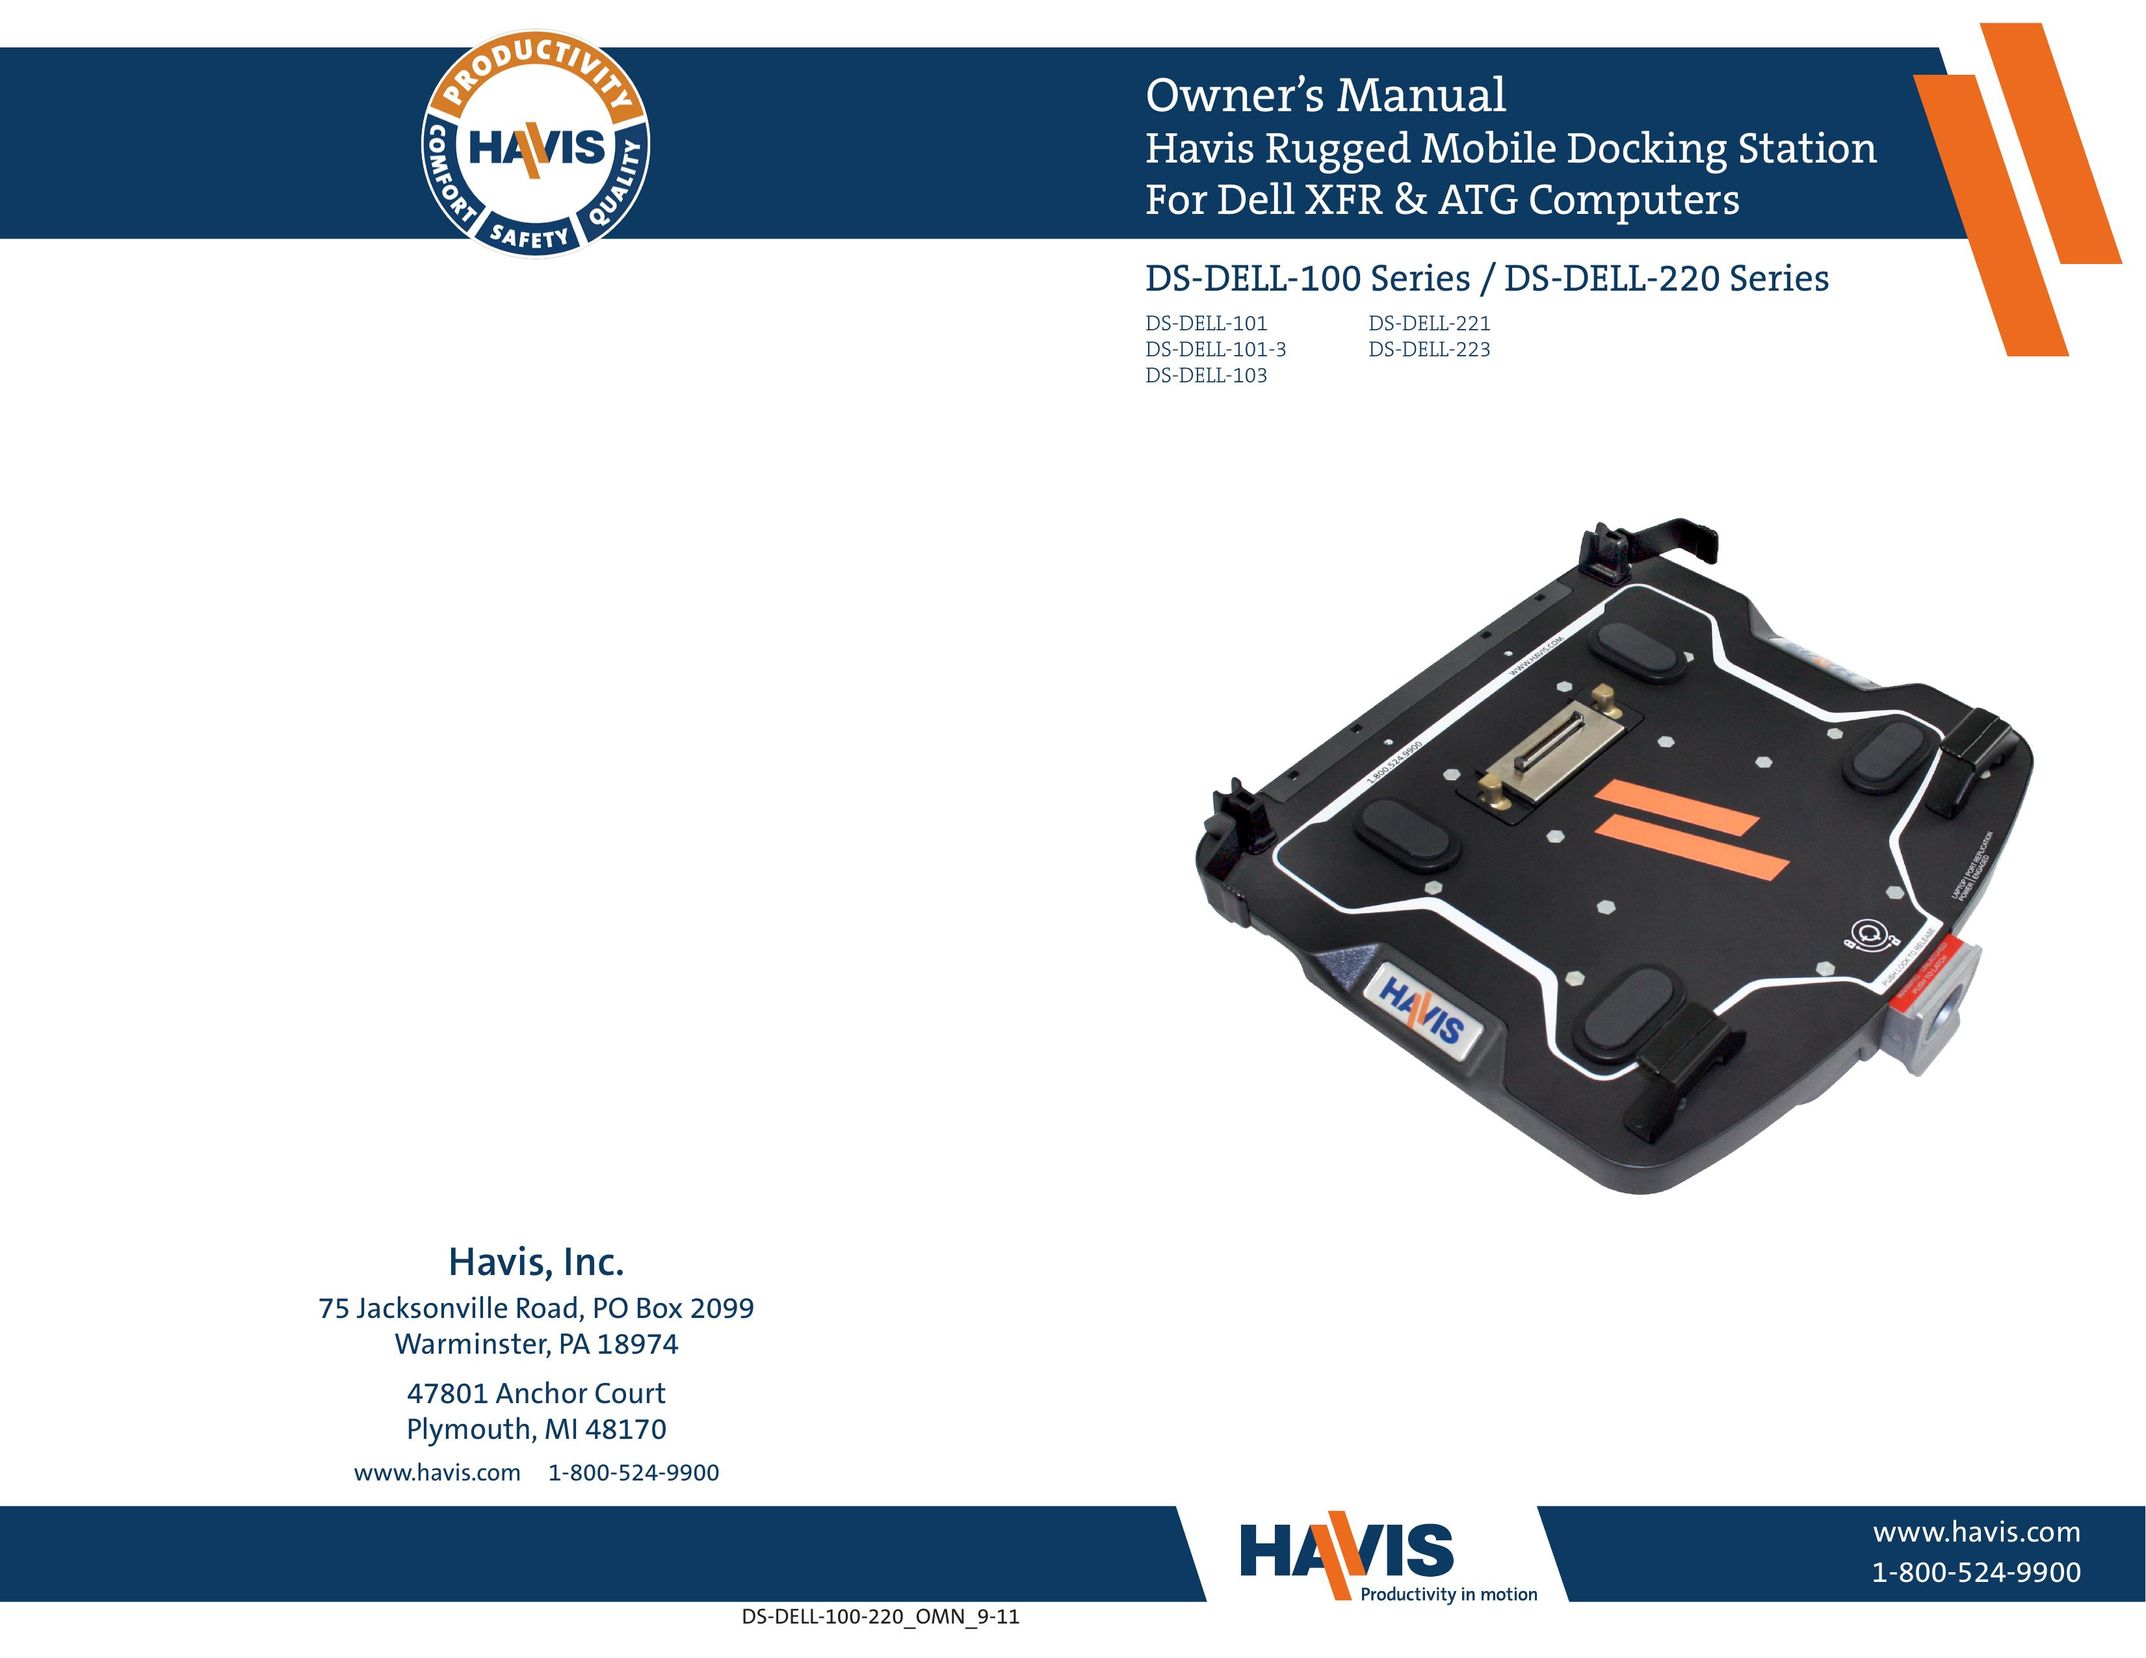 Havis-Shields DS-DELL-101 Laptop Docking Station User Manual